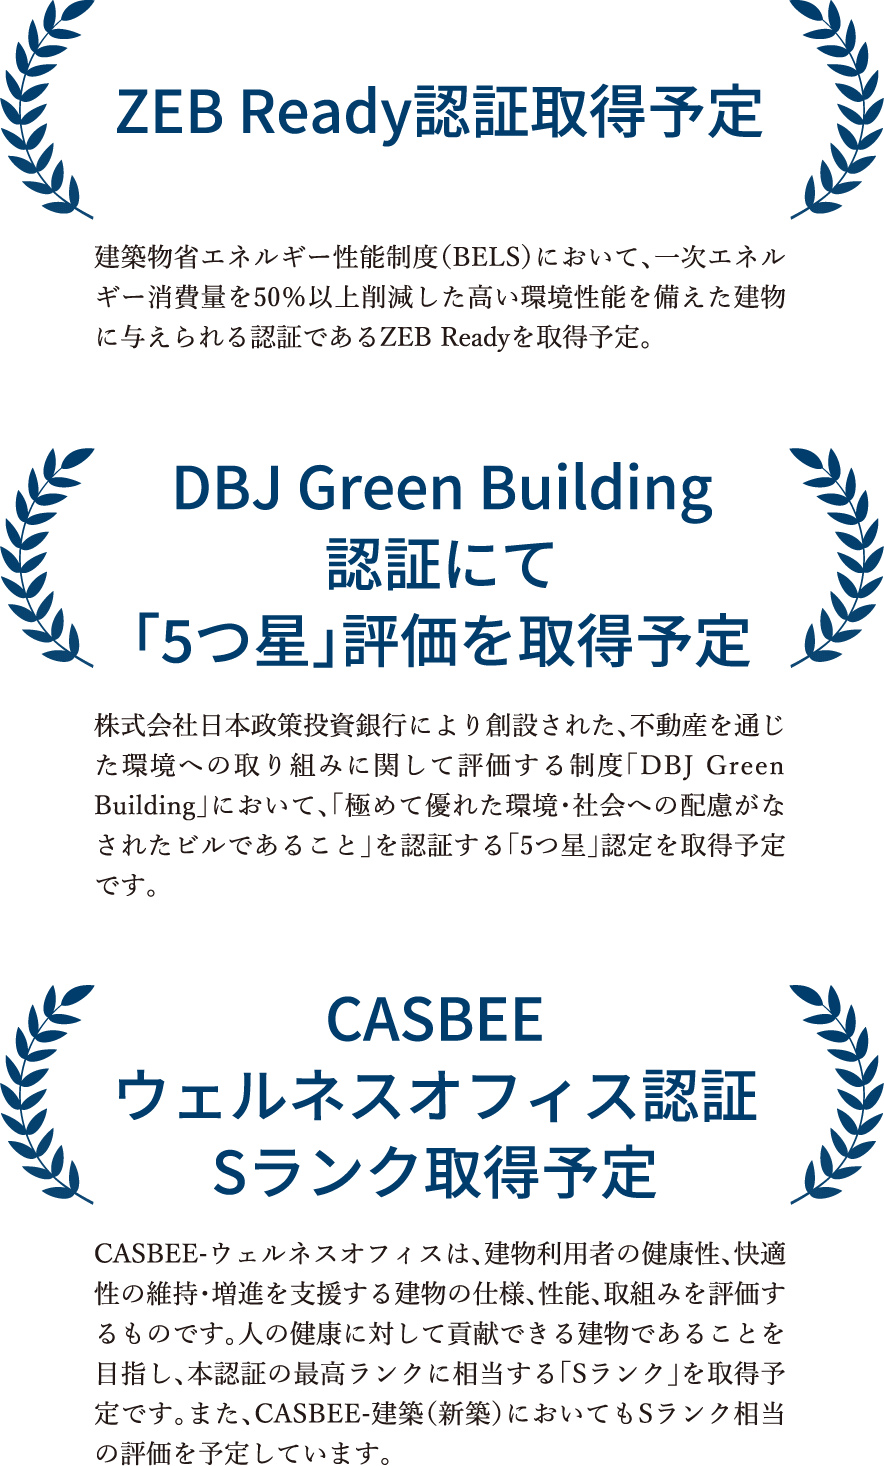 ZEB Ready認証取得予定｜DBJ Green Building認証にて「5つ星」評価を取得予定｜CASBEEウェルネスオフィス認証 Sランク取得予定